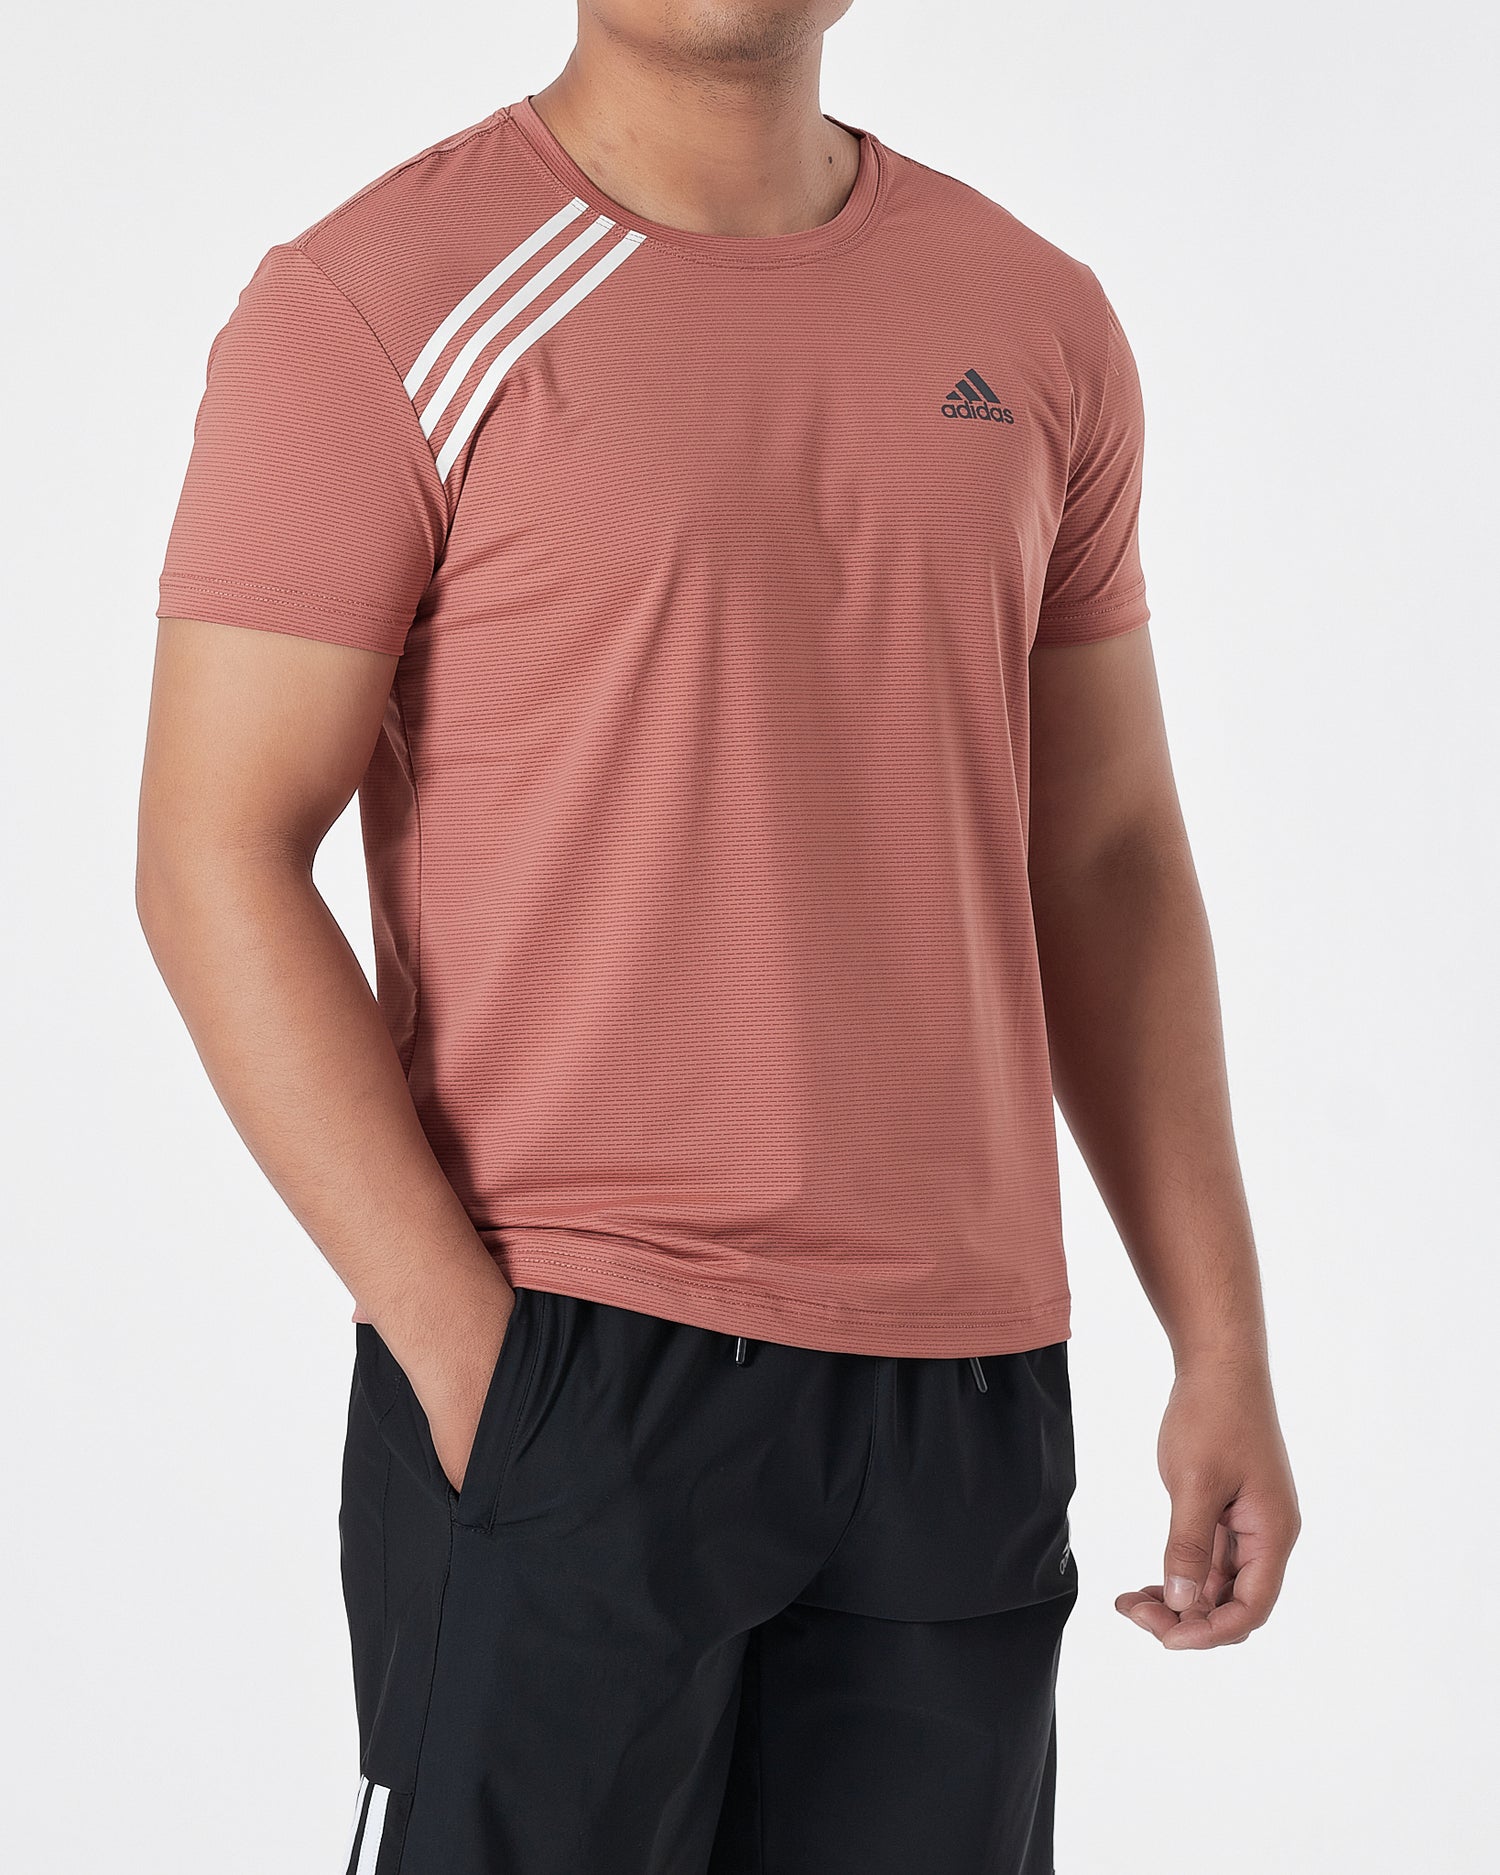 ADI Shoulder Striped Men Coral Sport T-Shirt 14.50